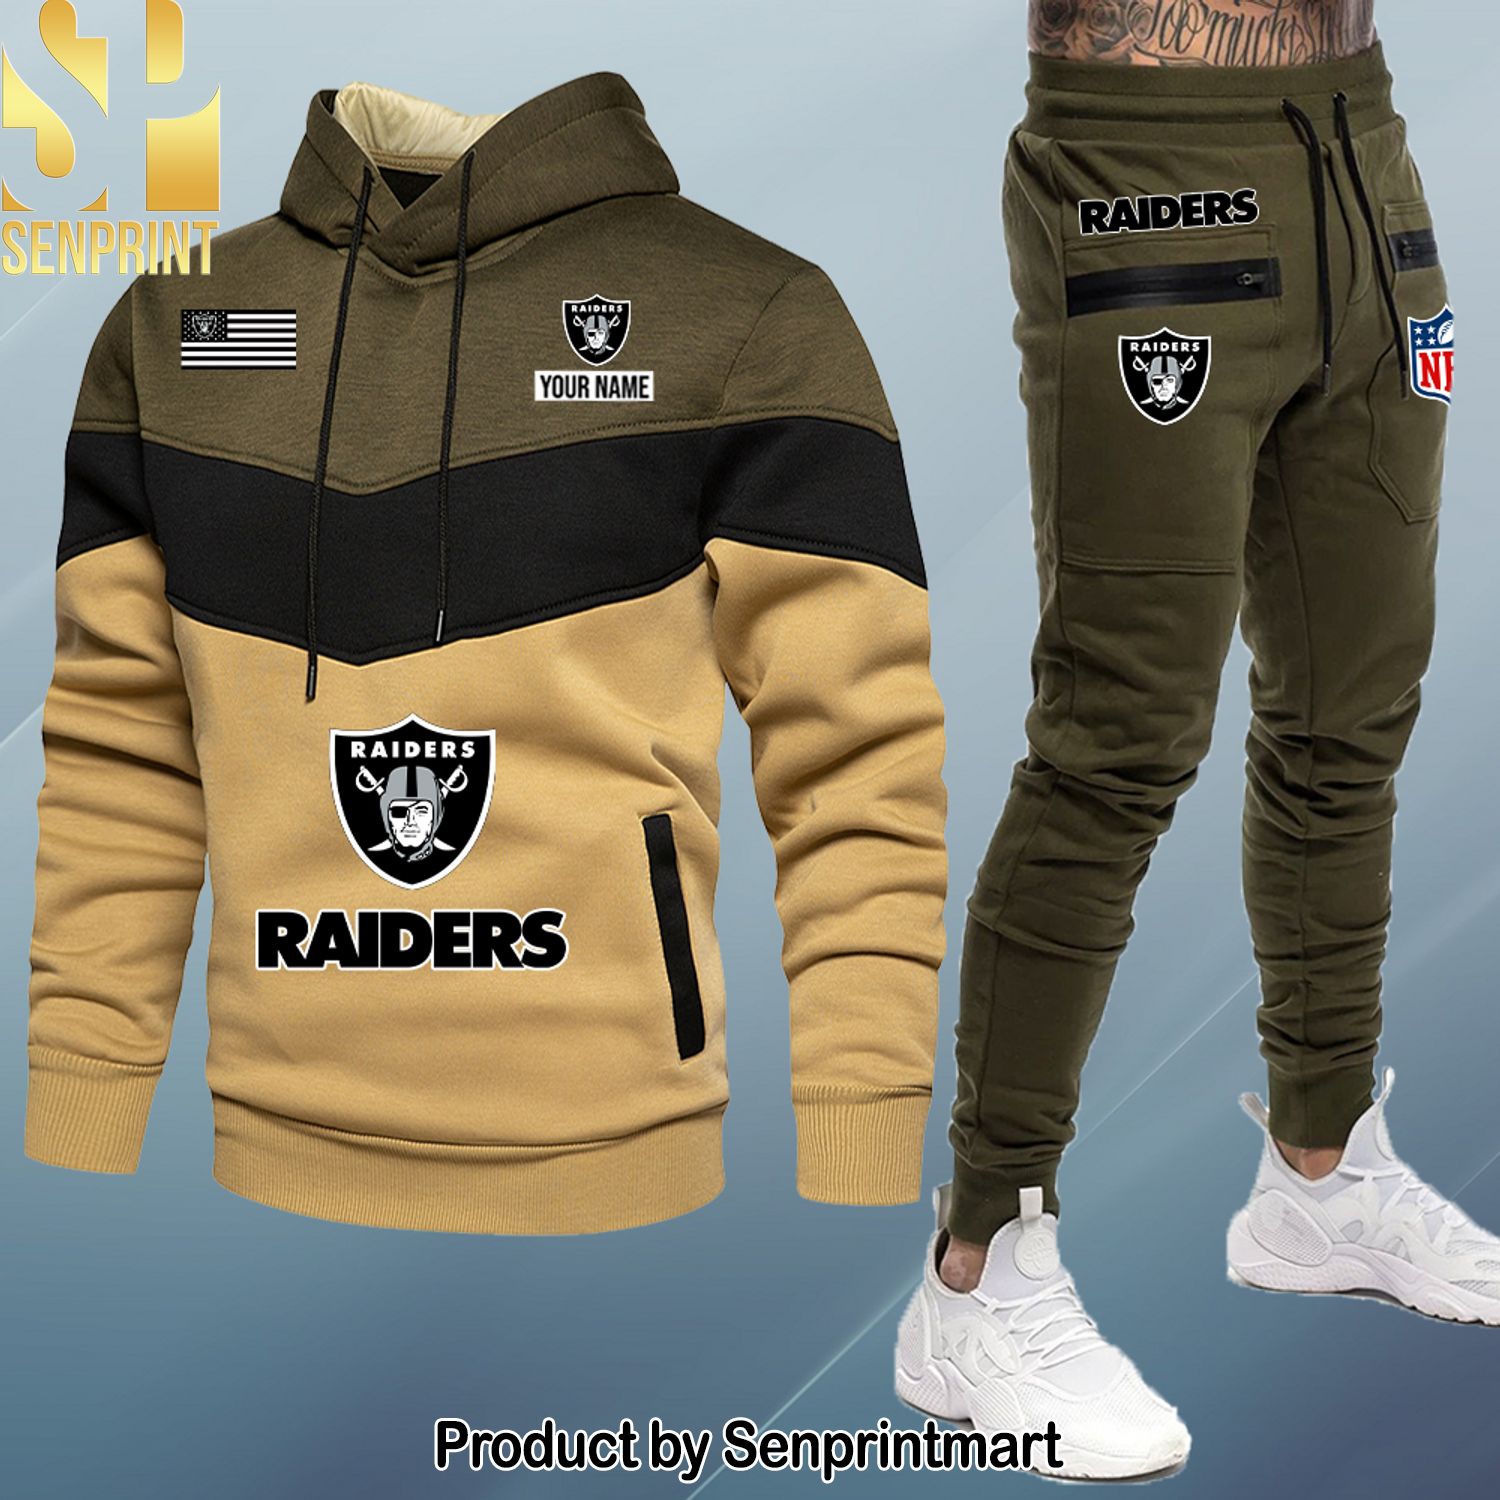 NFL Las Vegas Raiders Full Printed Unisex Shirt and Pants